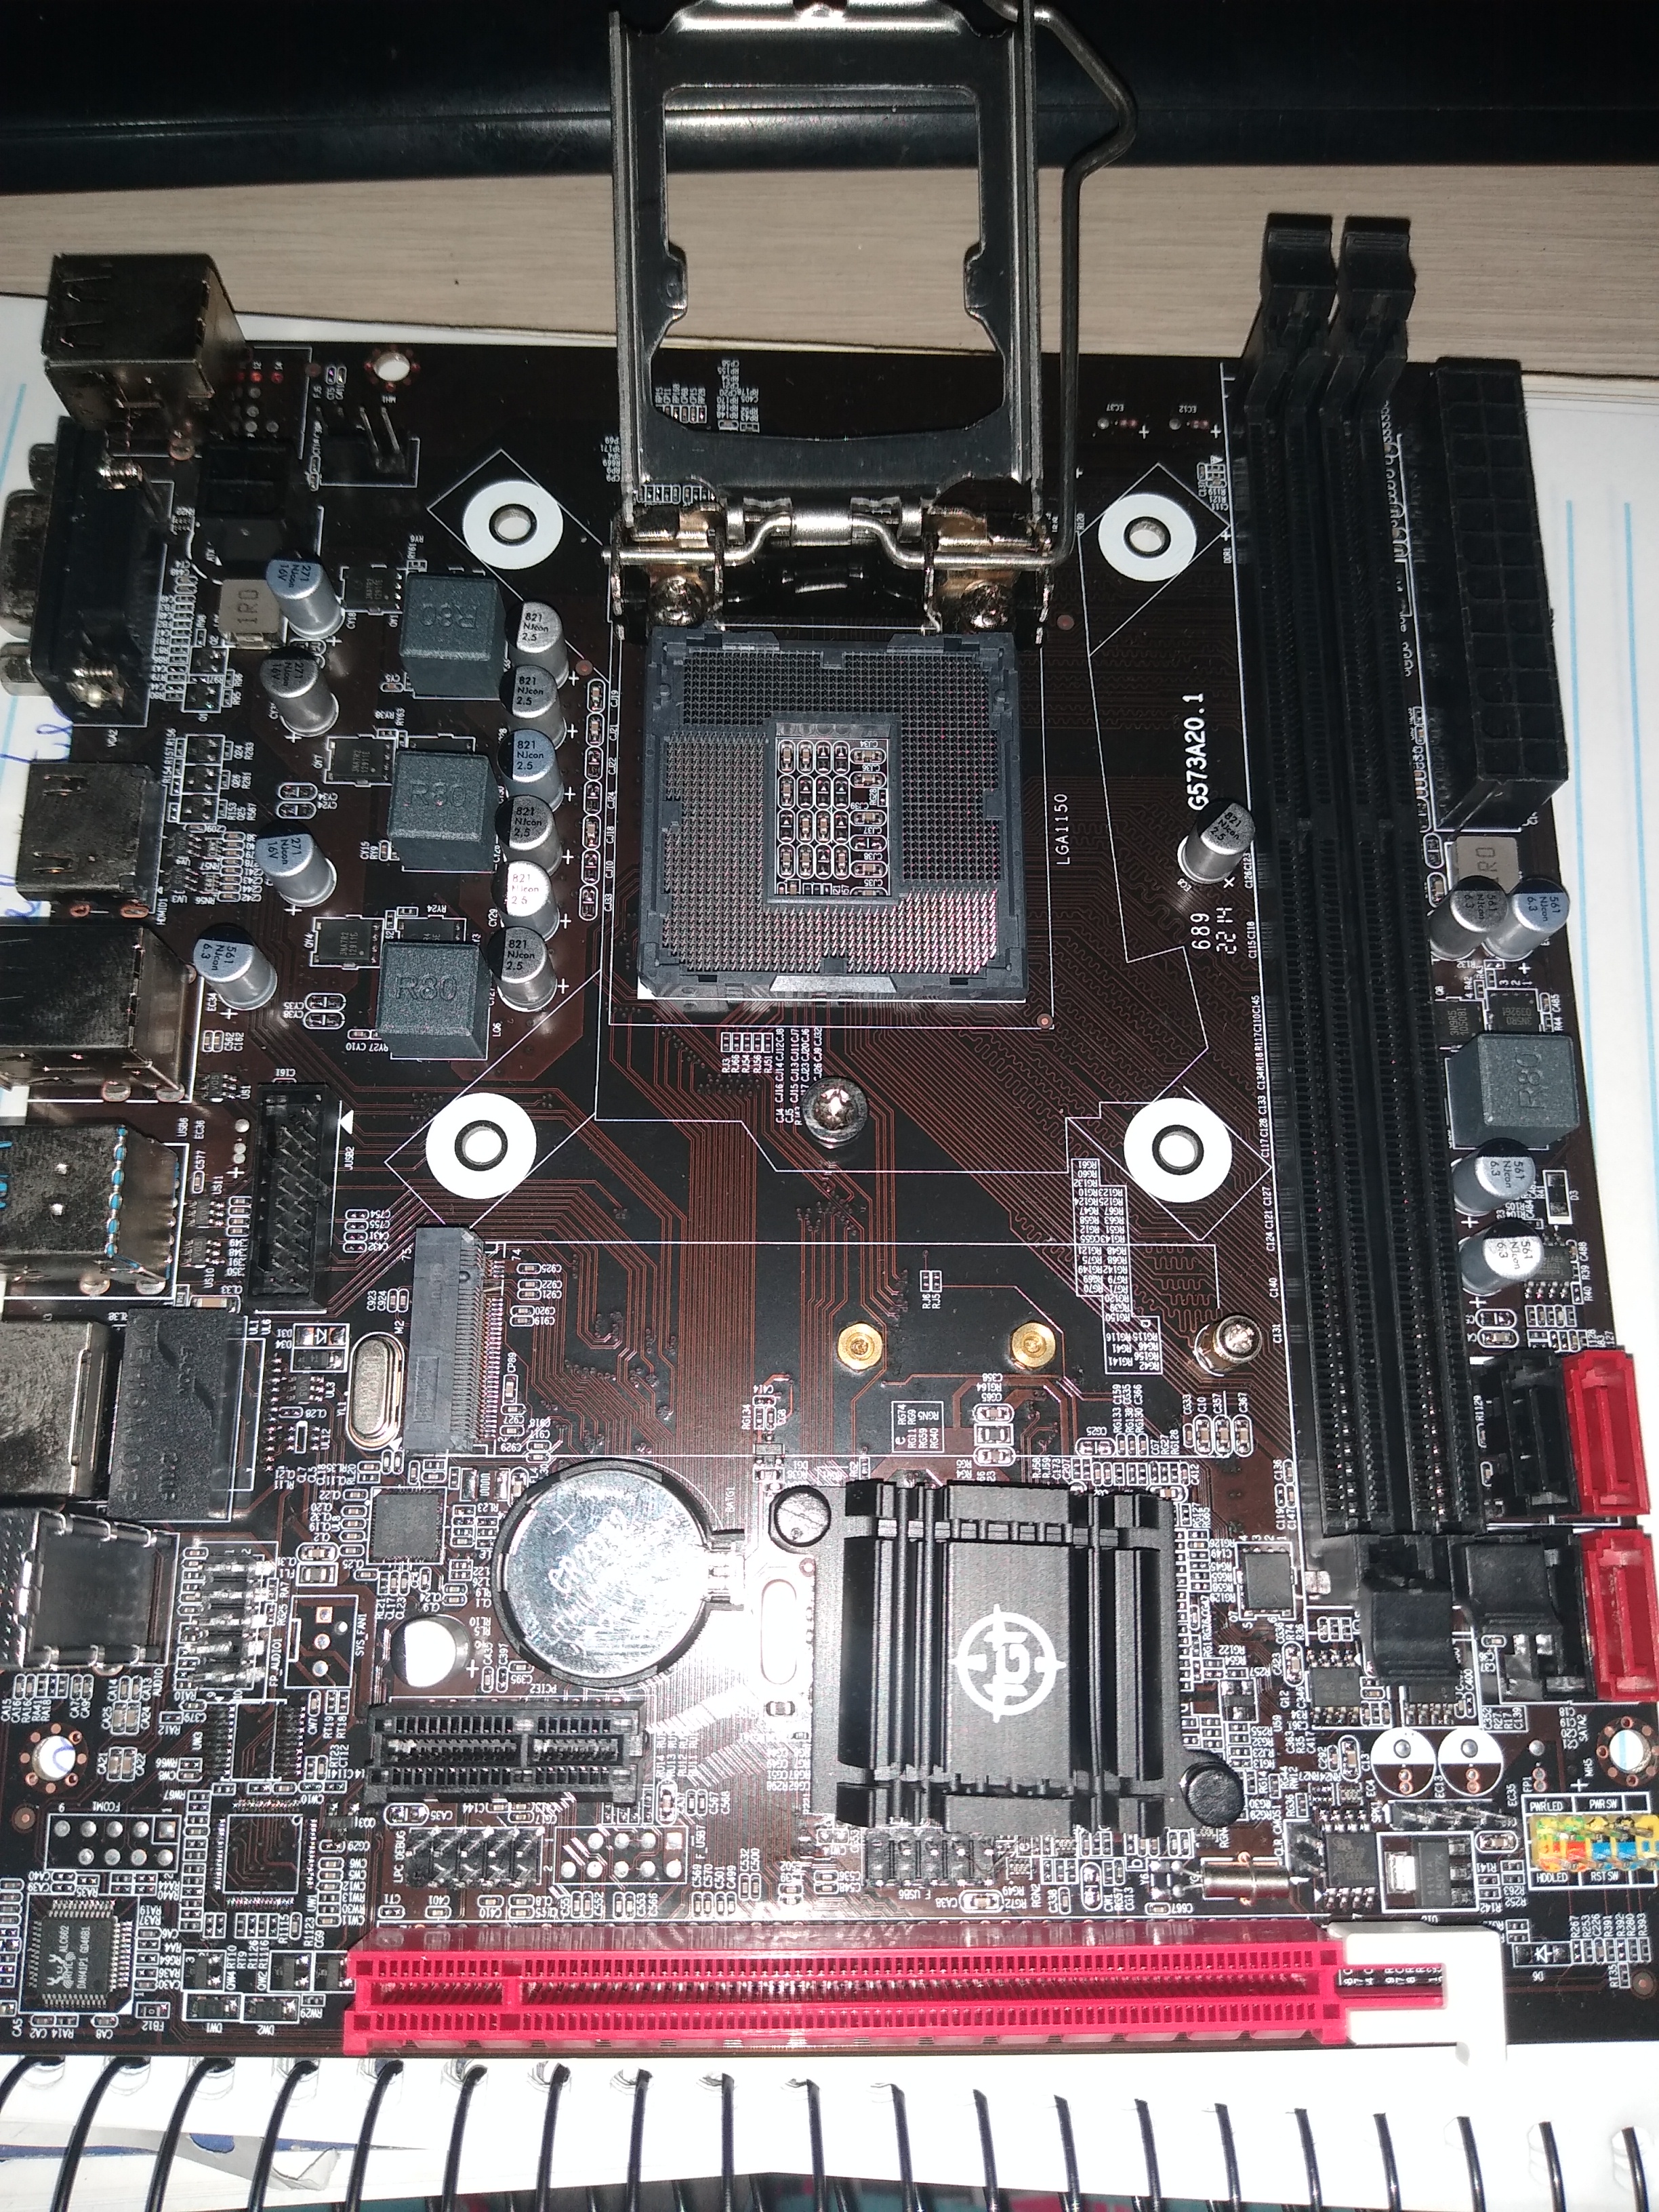 Placa Mae TGT H81NTC, Socket LGA1150, M-ATX, Chipset intel H81